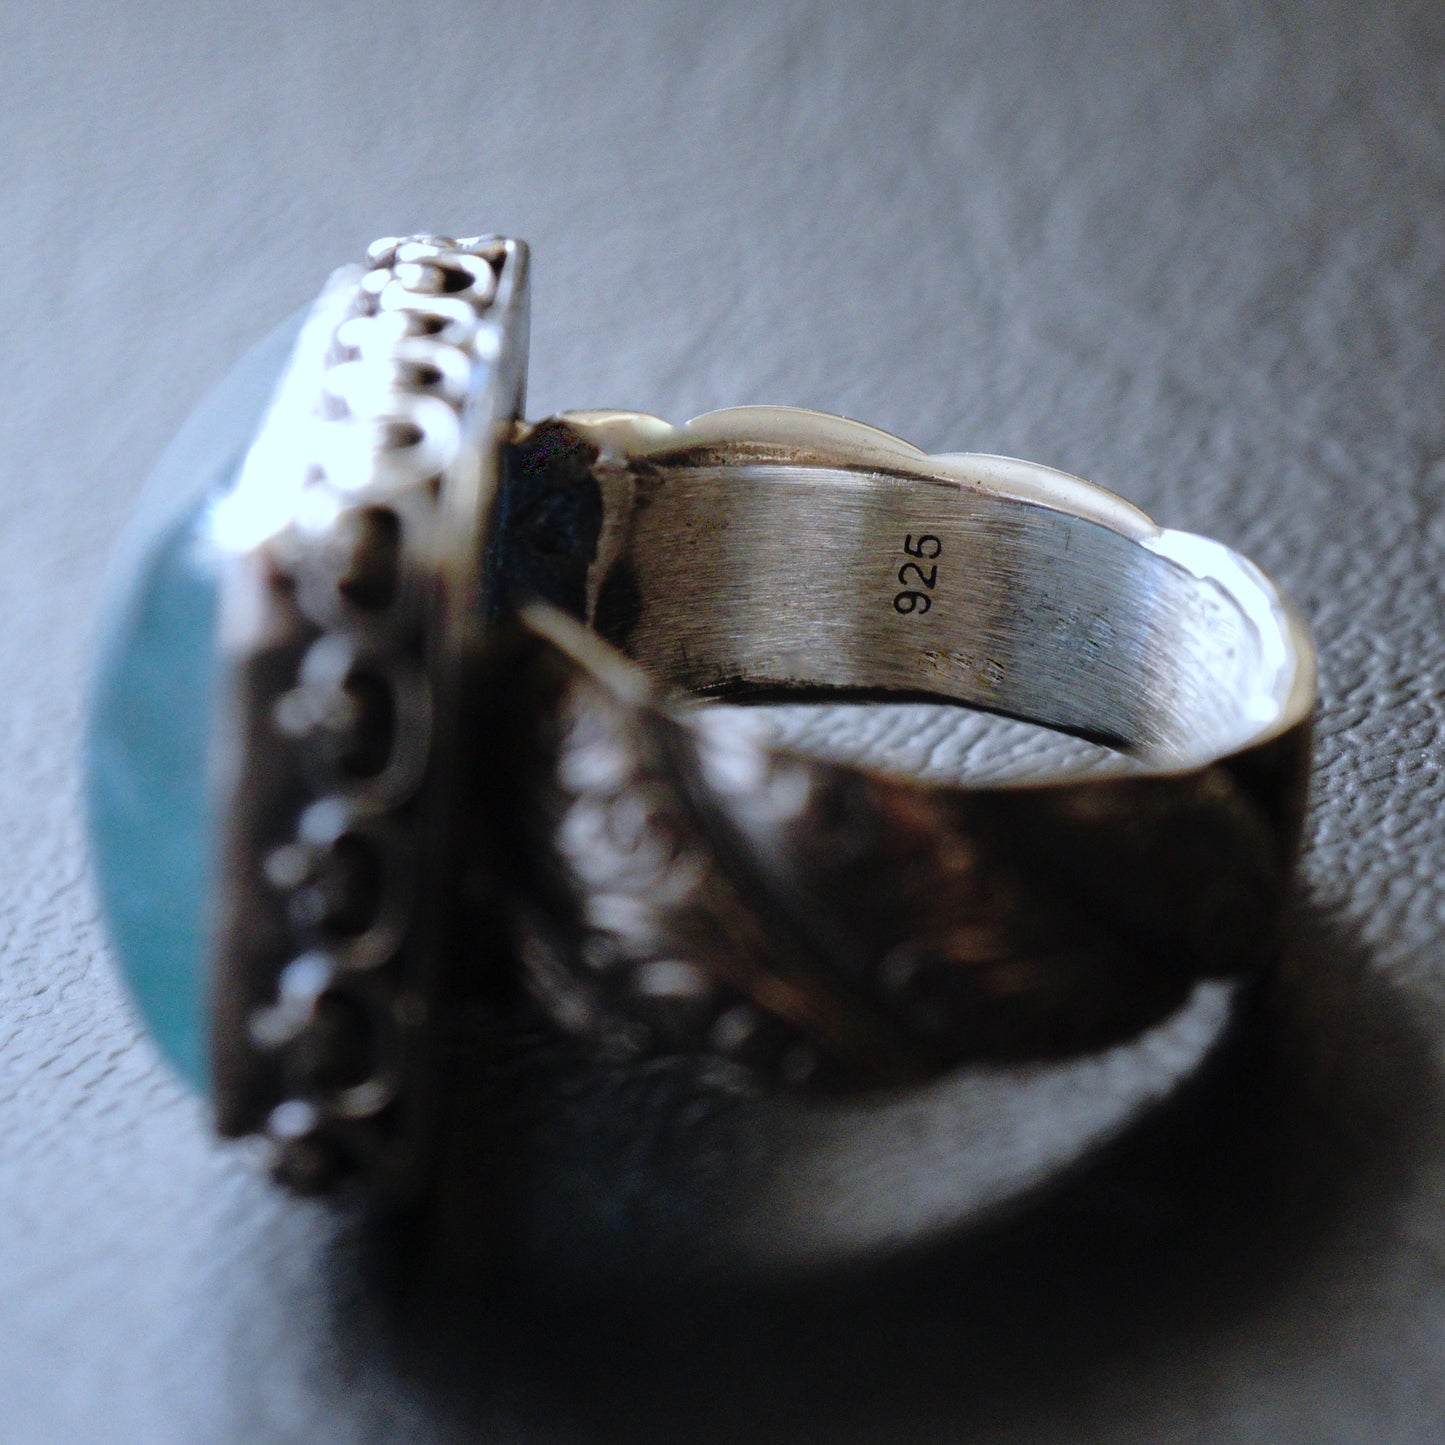 Silver Mens Ring blue Aquamarine natural gemstone Handmade Unique Artisan Jewelry